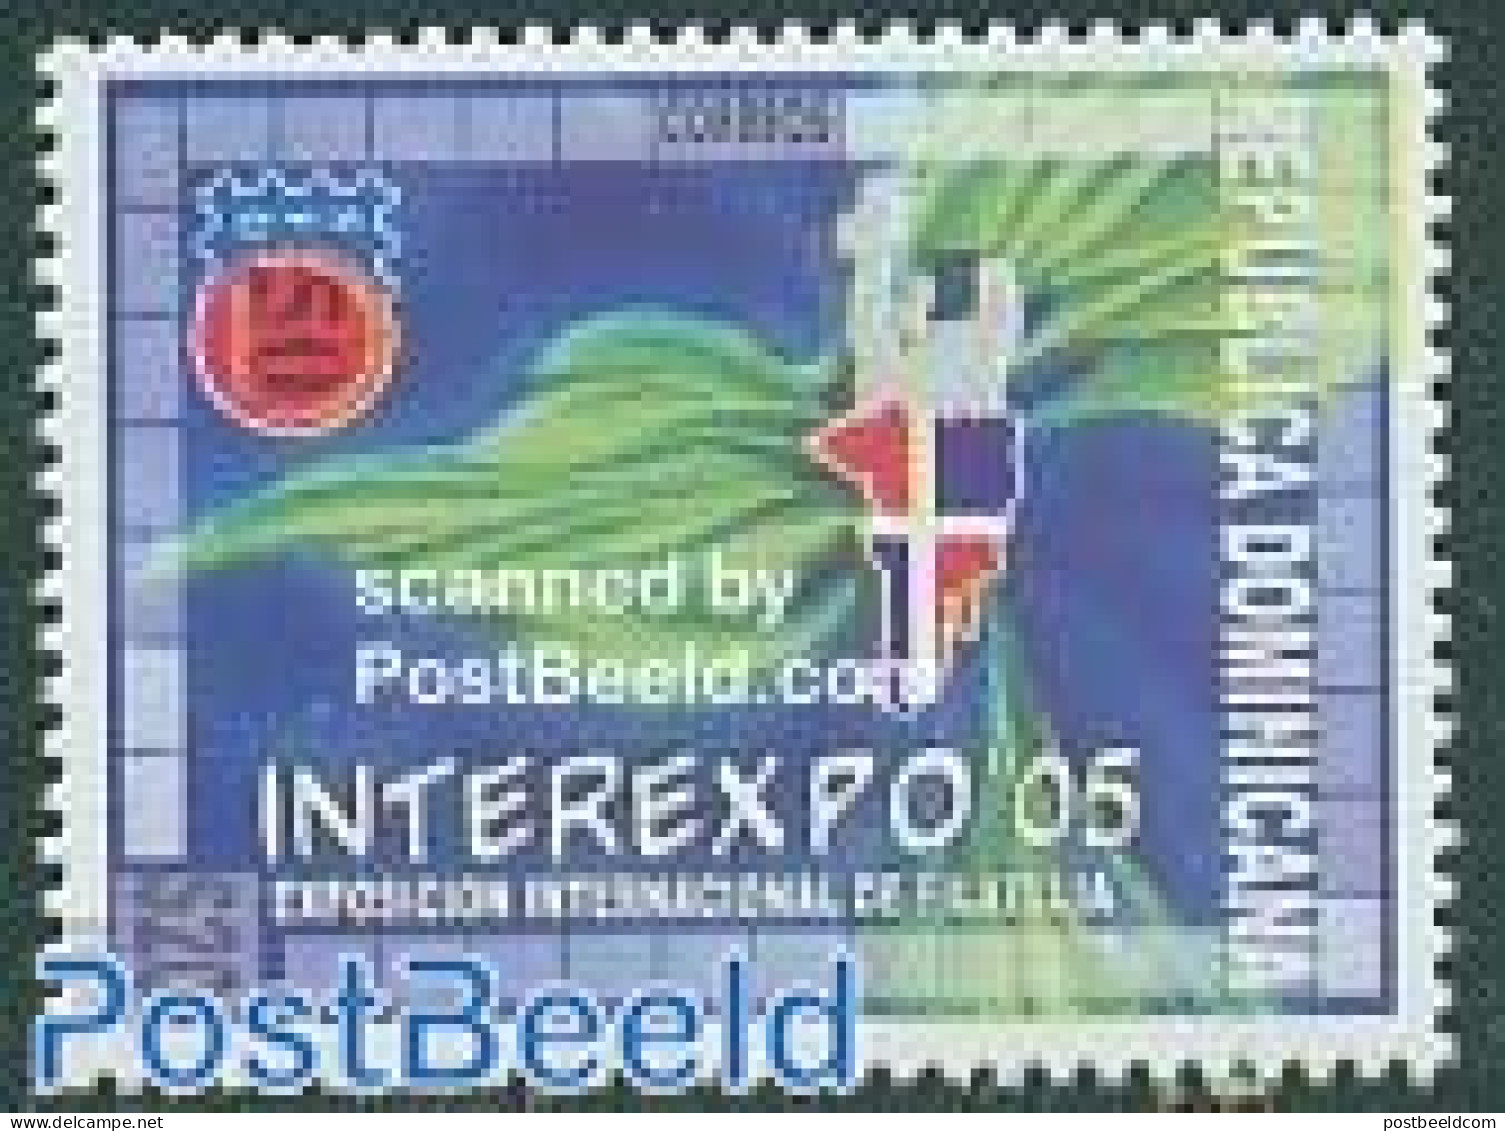 Dominican Republic 2005 Interexpo 05 1v, Mint NH, Various - Maps - Géographie